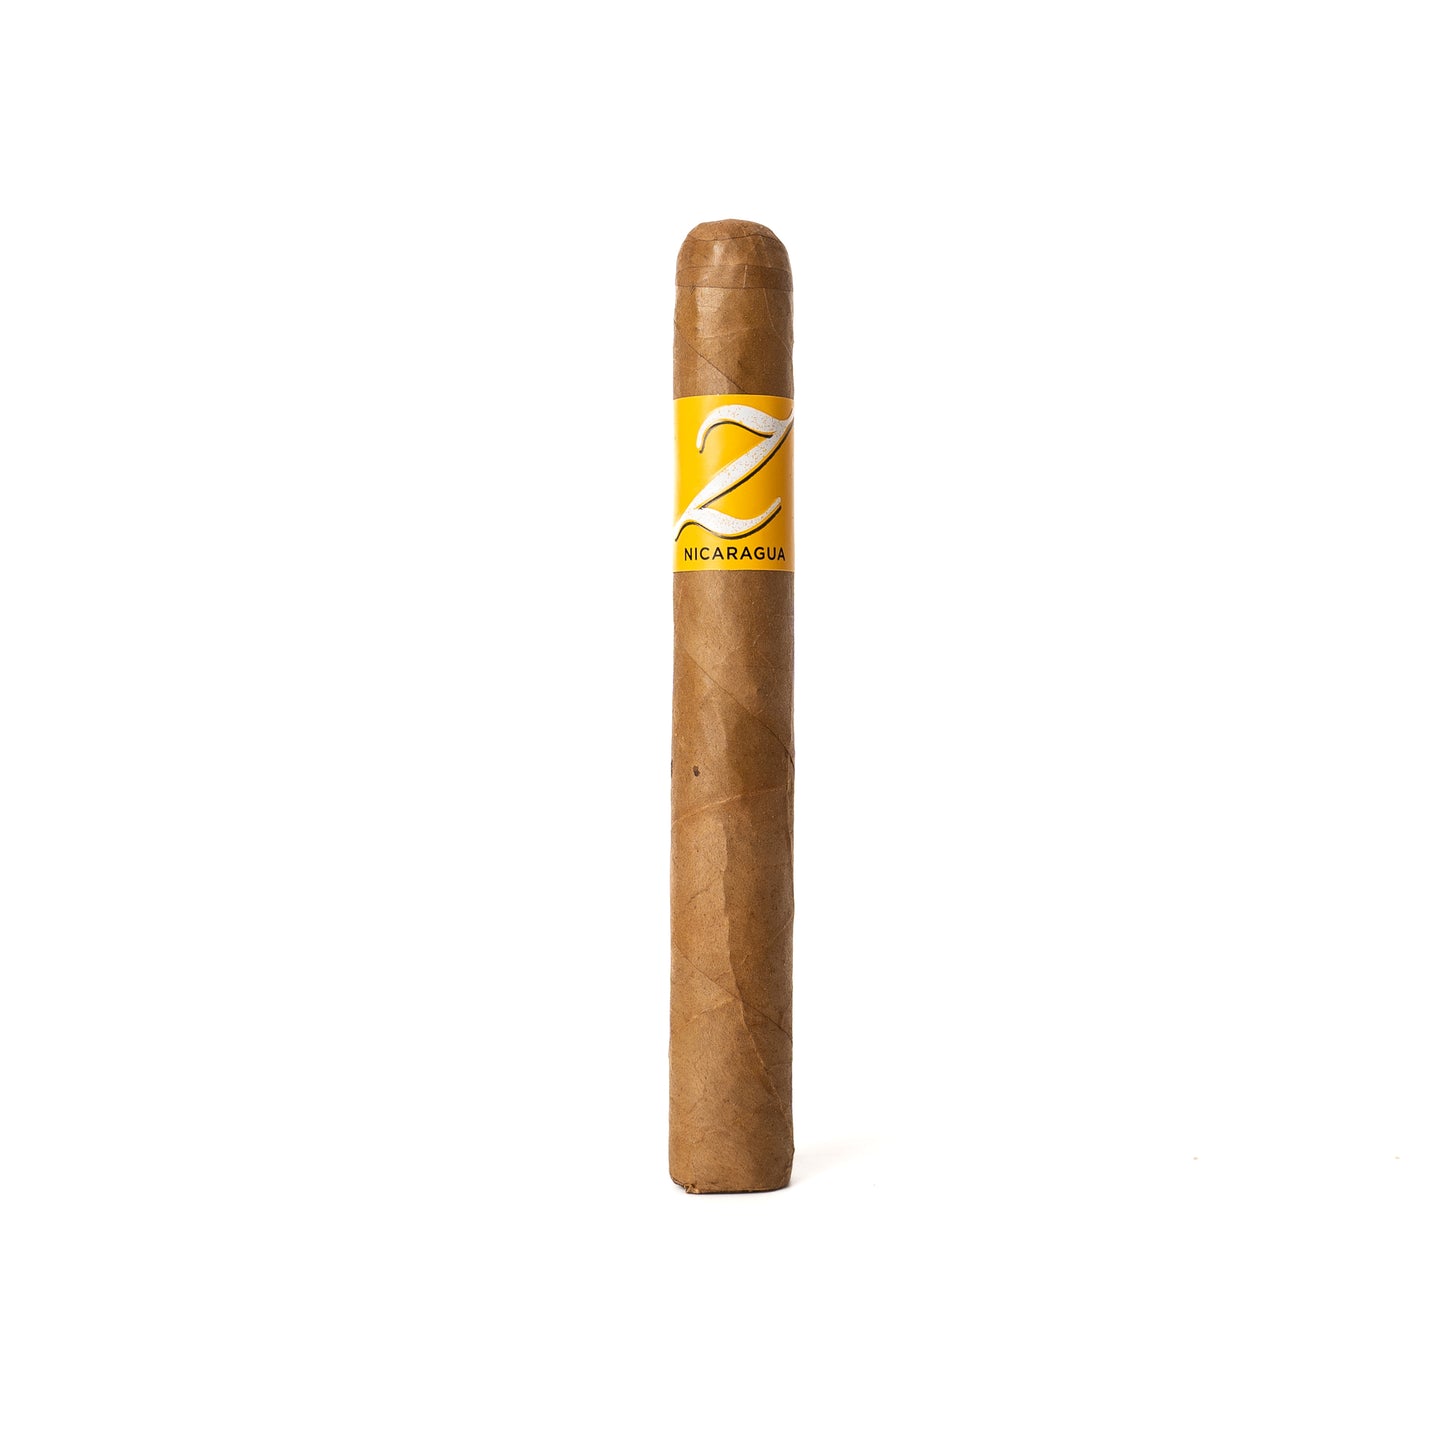 Zino Nicaragua Toro Cigar - Single Piece